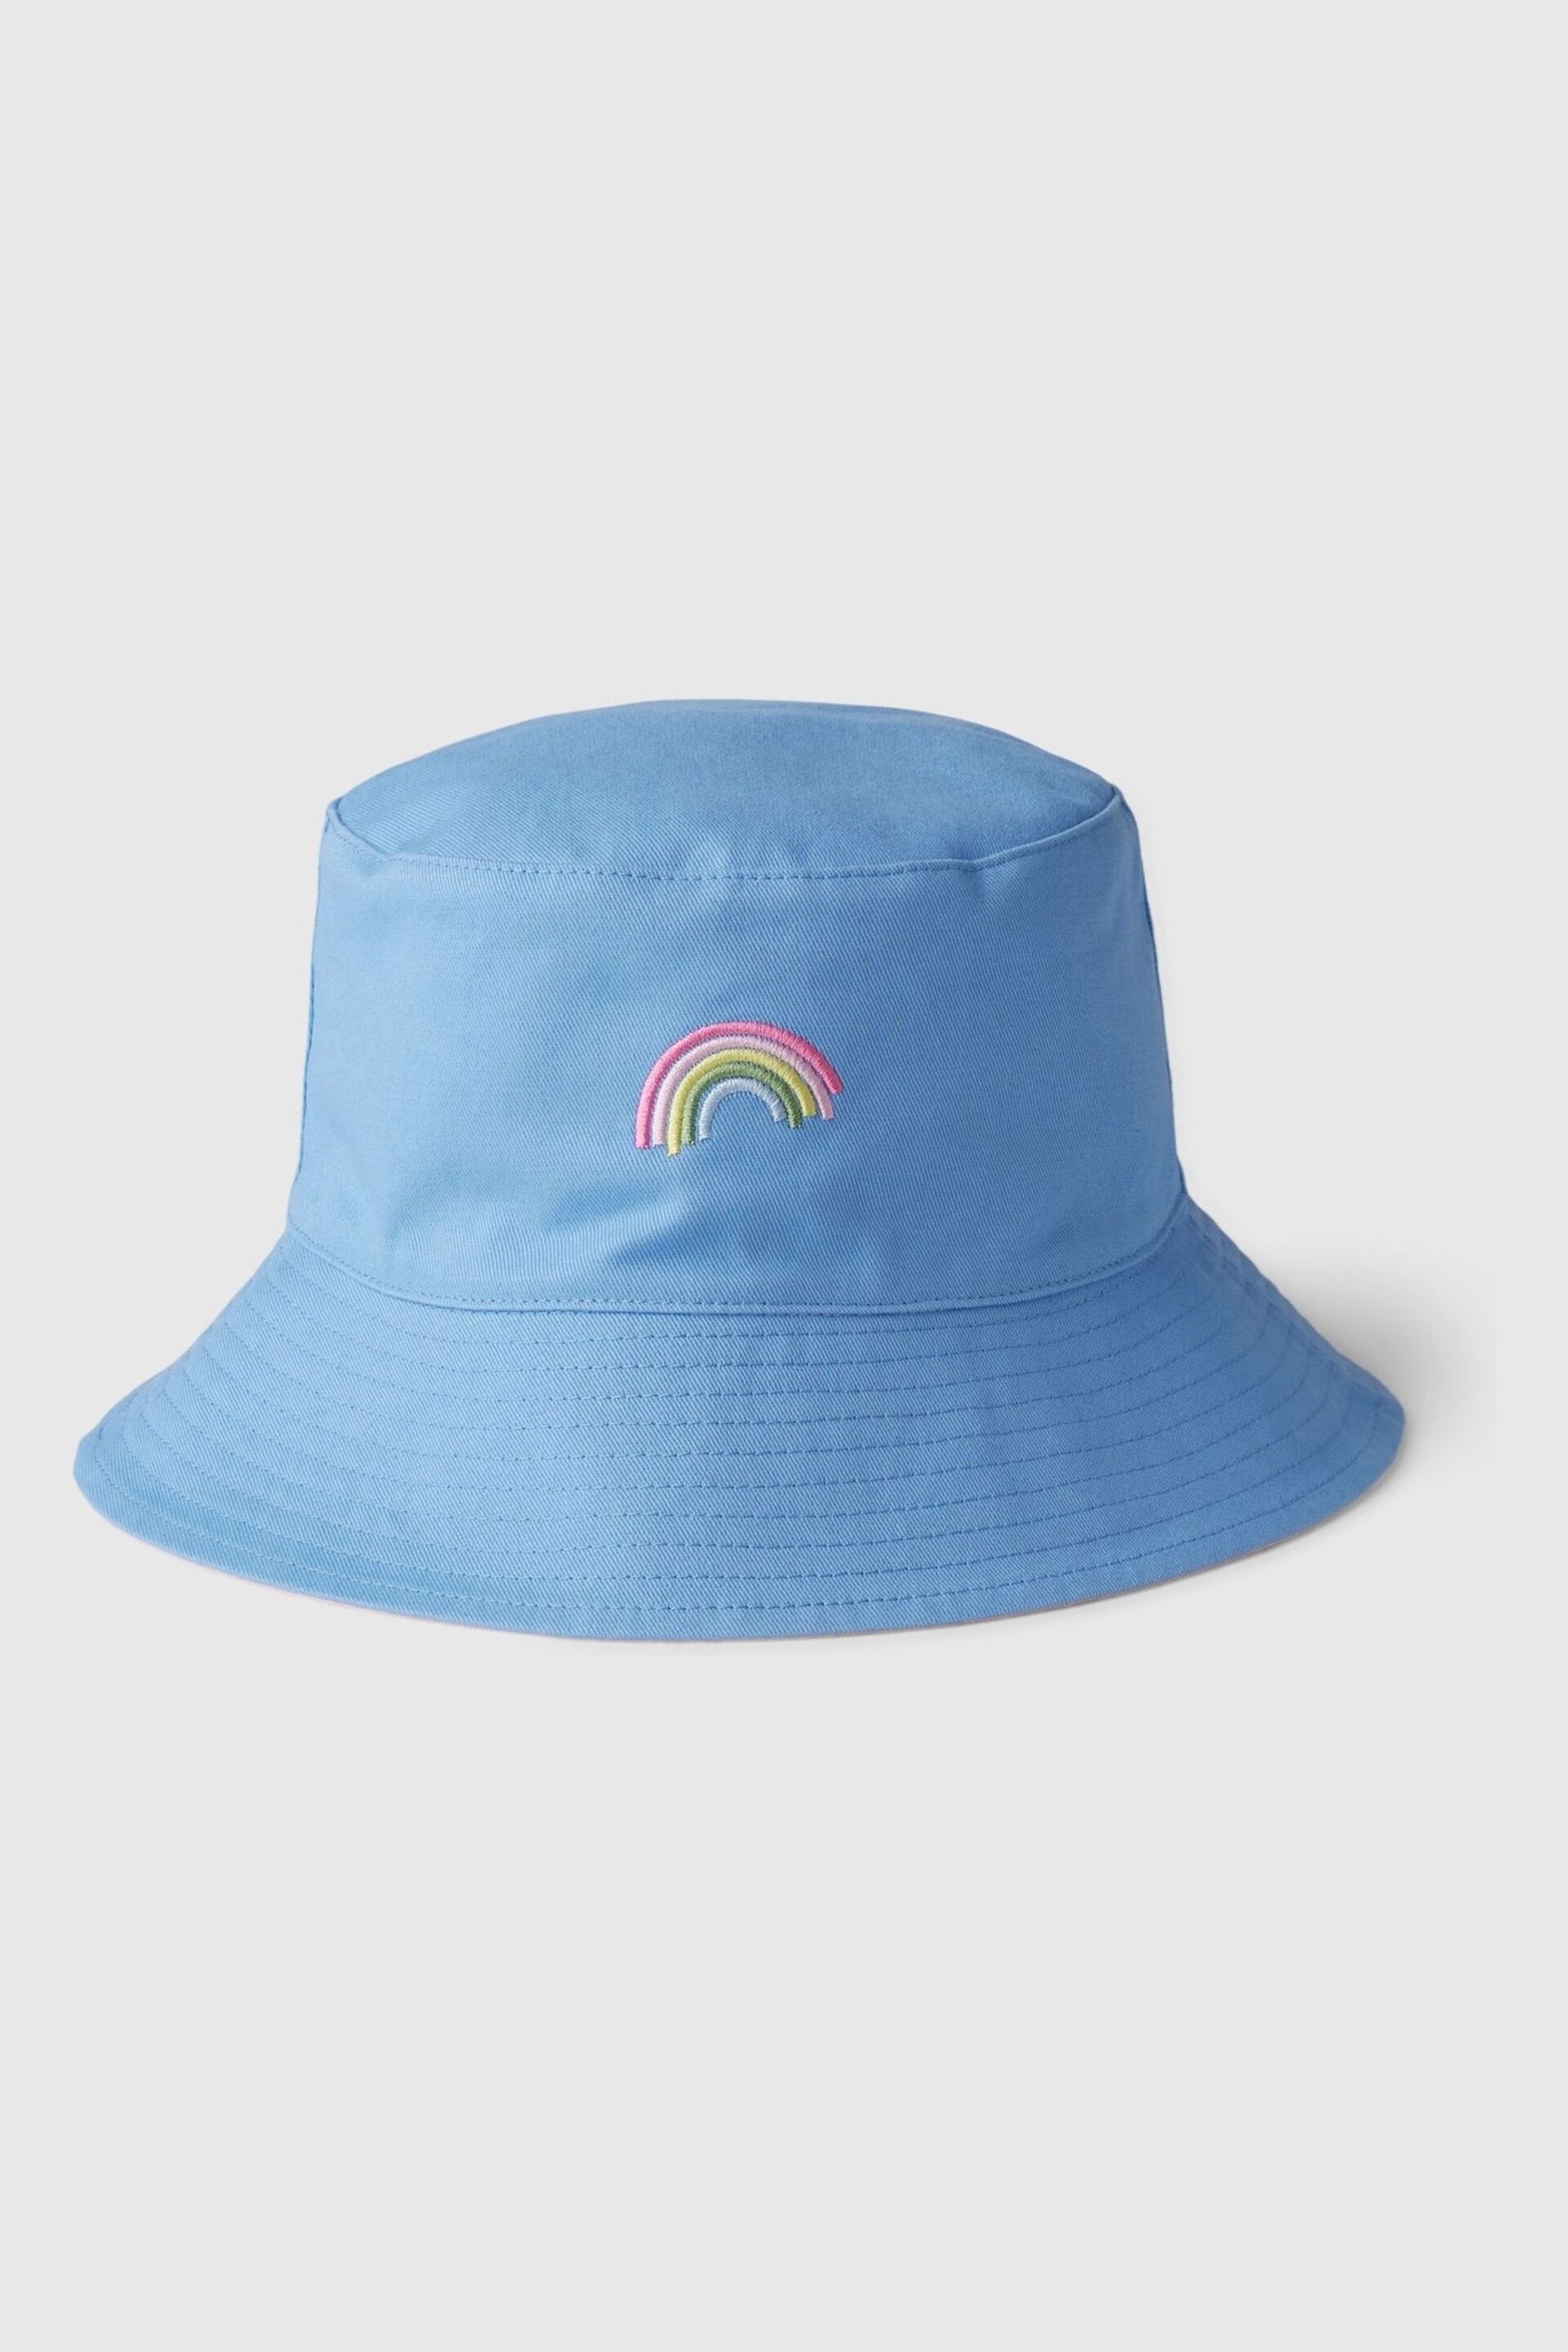 Gap Blue Rainbow Organic Cotton Reversible Bucket Hat - Image 1 of 1